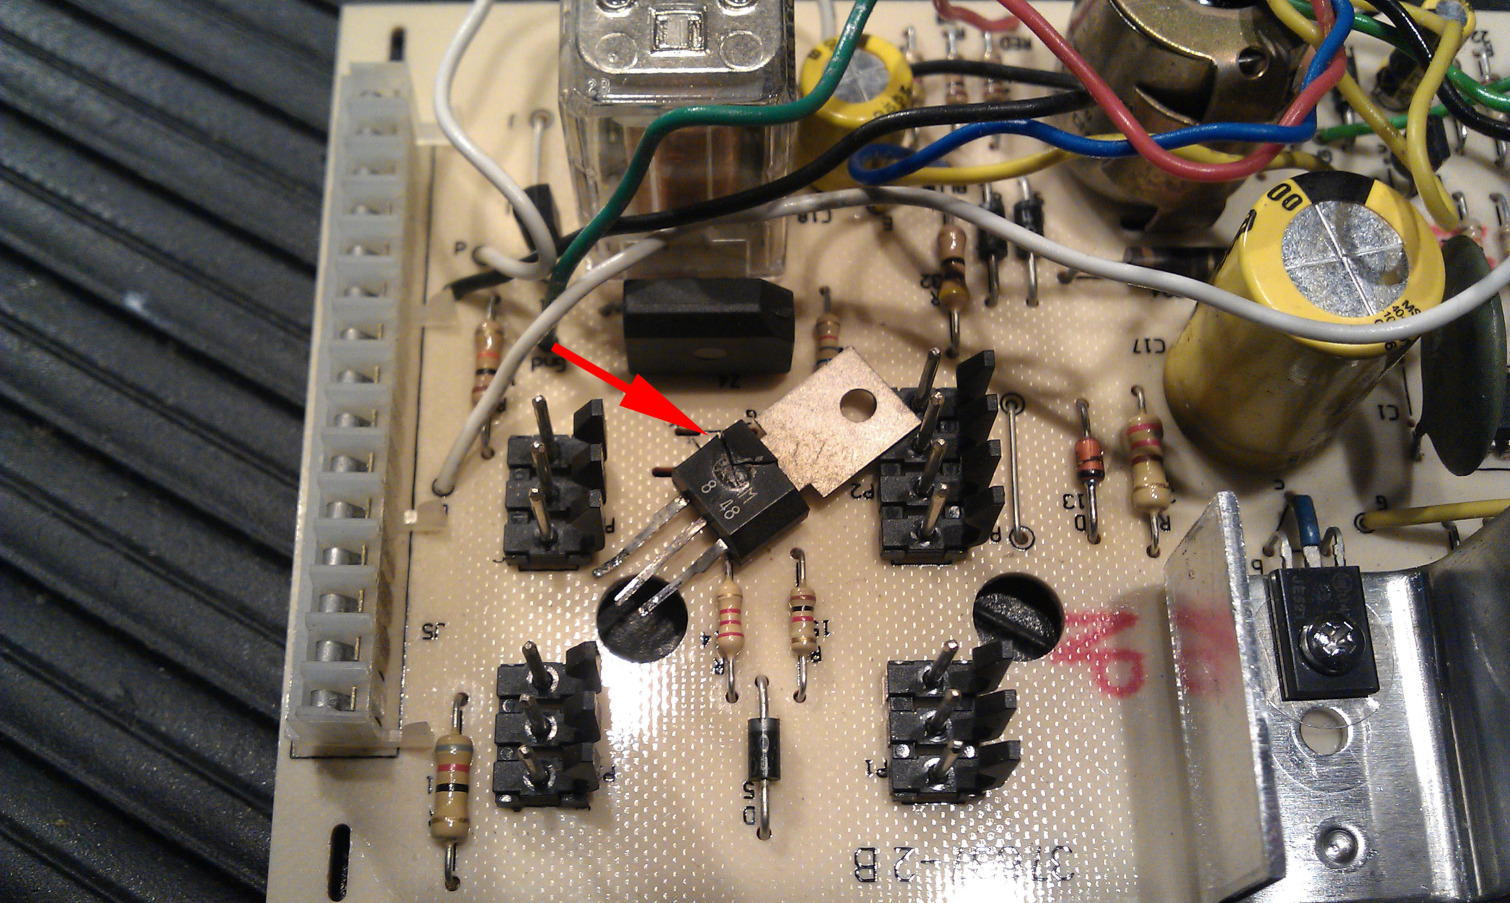 478 amplifier with blown scr_edited-1.jpg